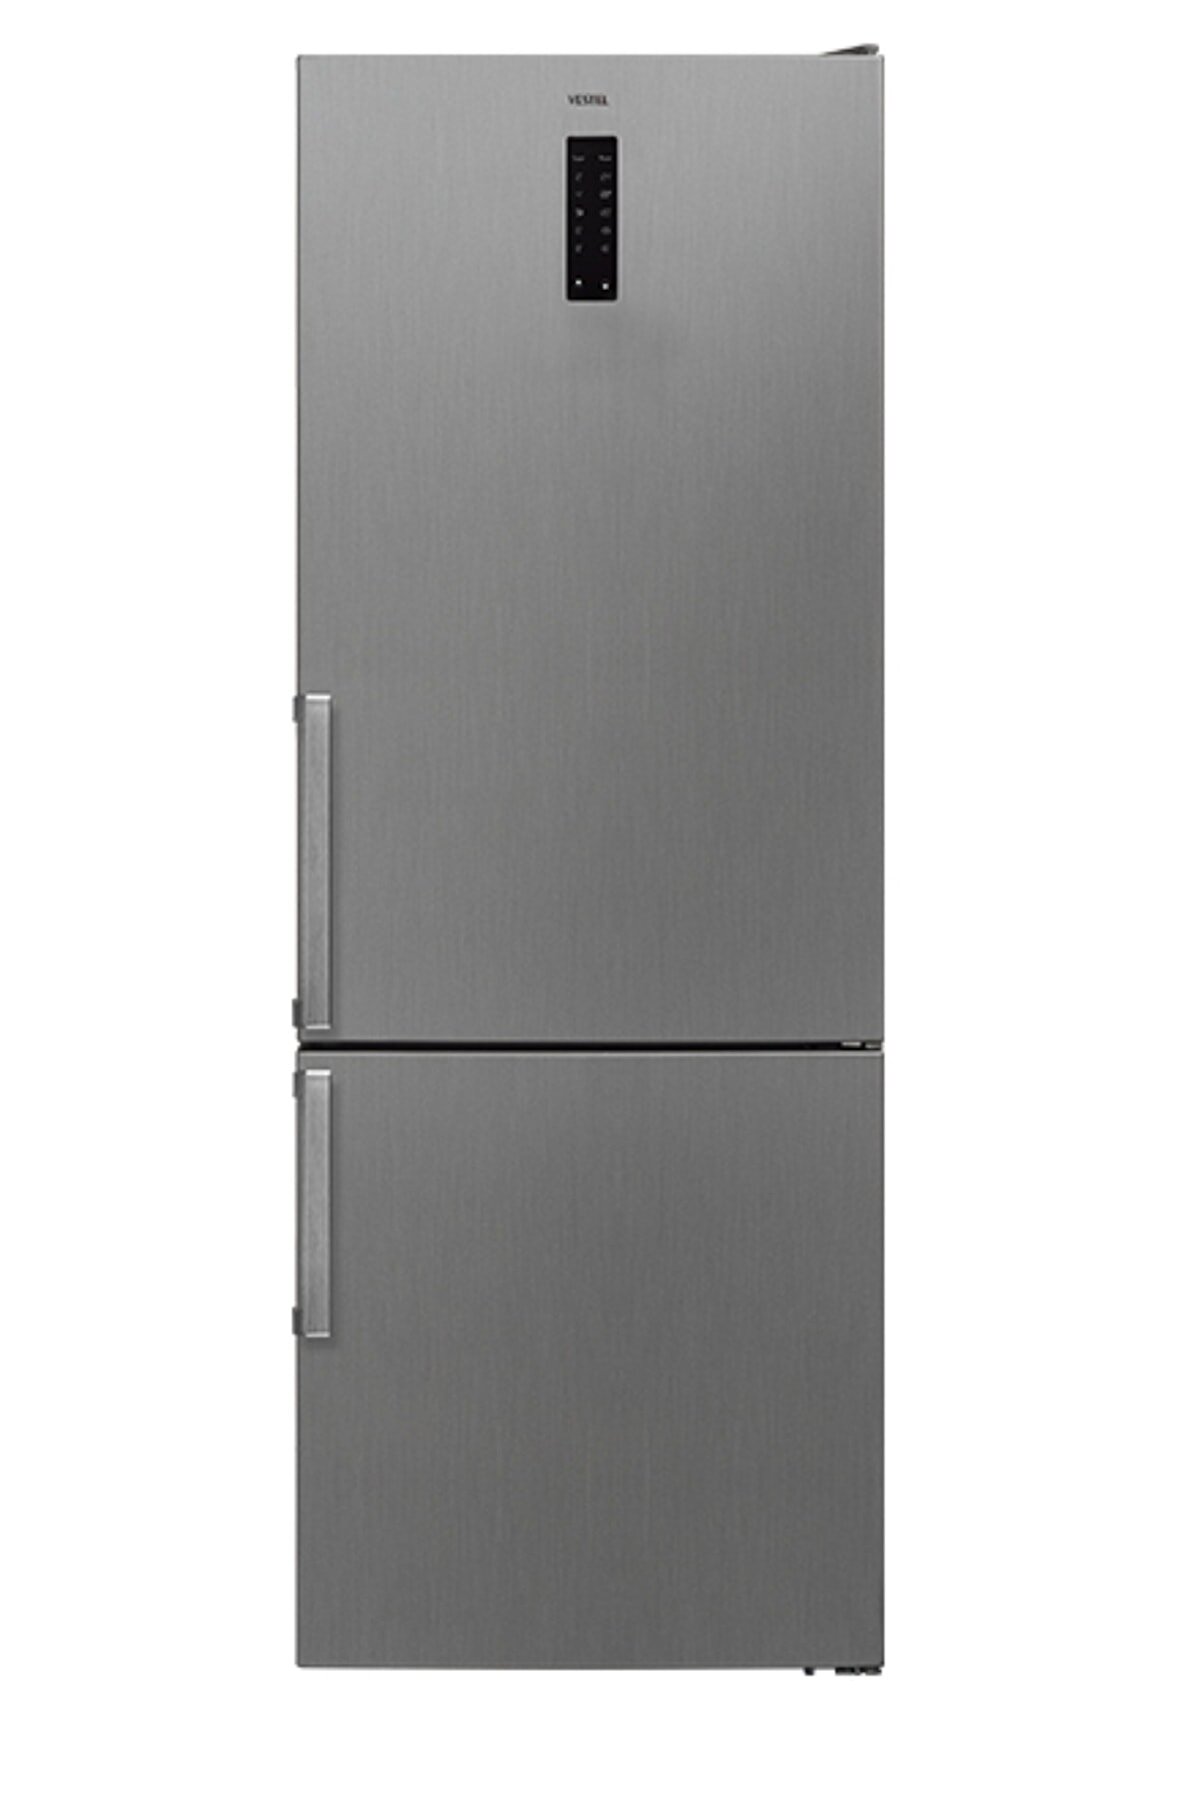 Regal NFK 54020 EIG No-Frost Fridge freezer